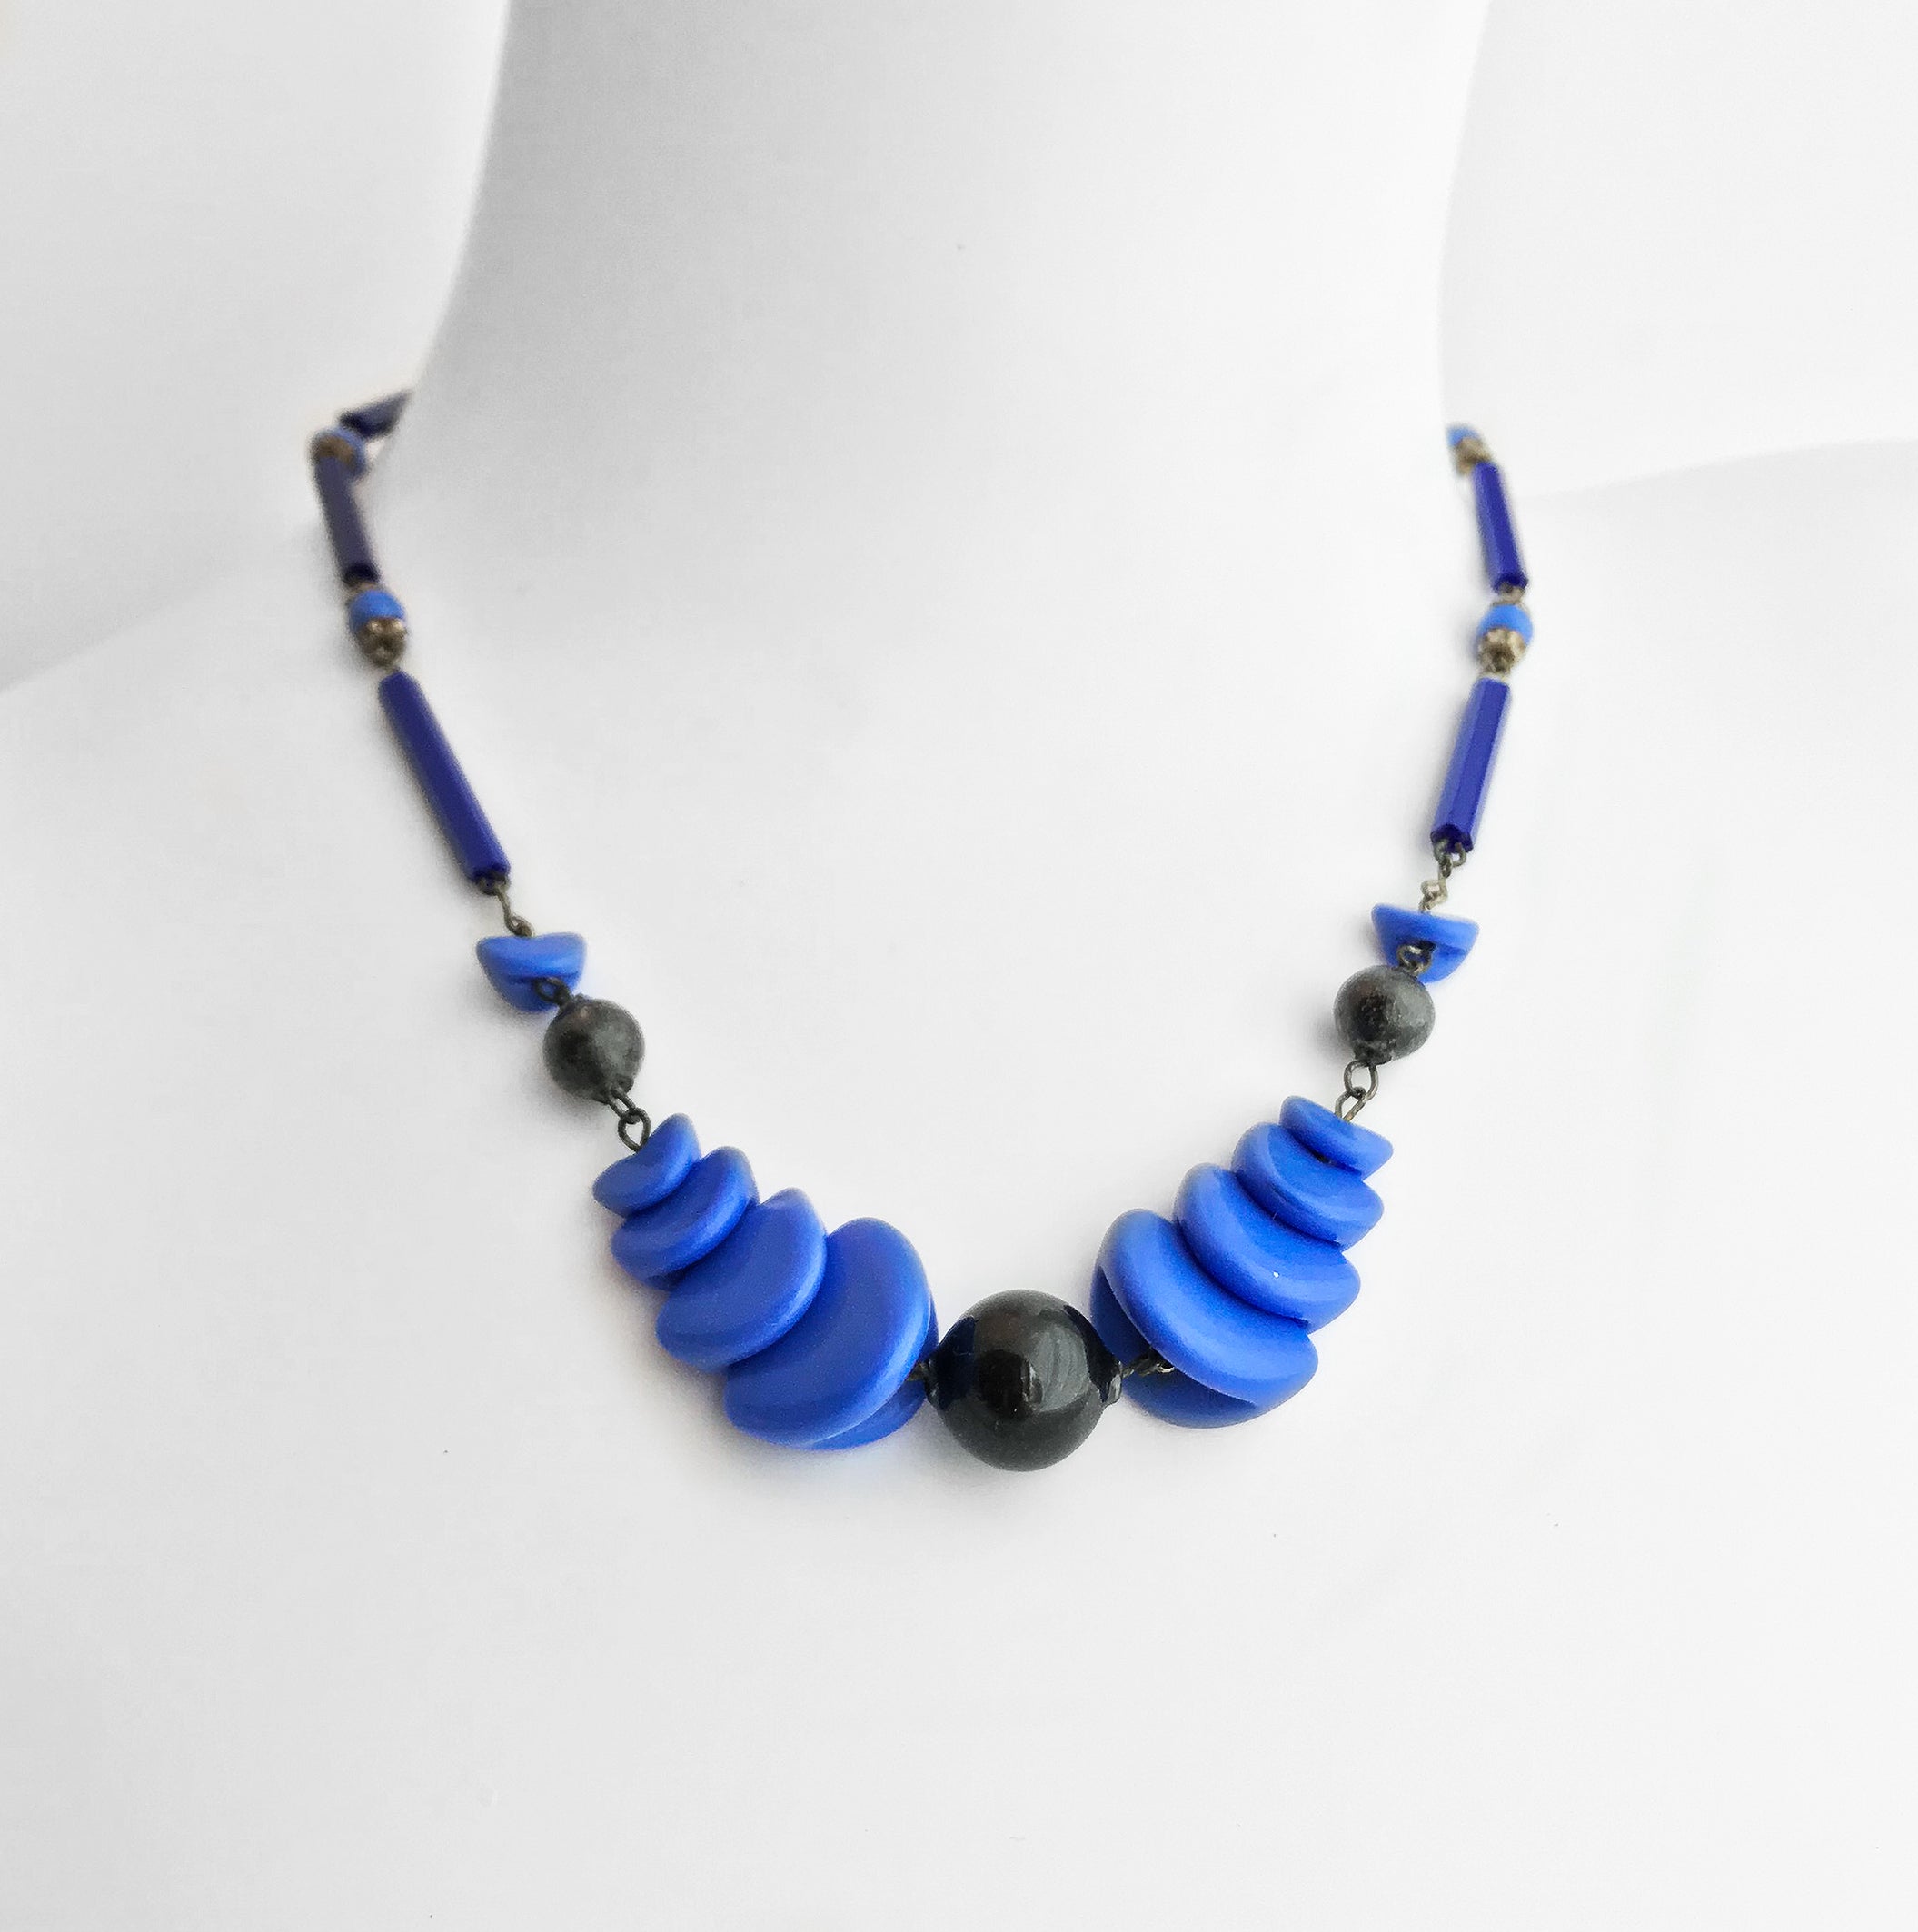 Vintage Blue and Black Geo-Metric Art Deco Necklace - SHOP NOW - www.intovintage.co.uk